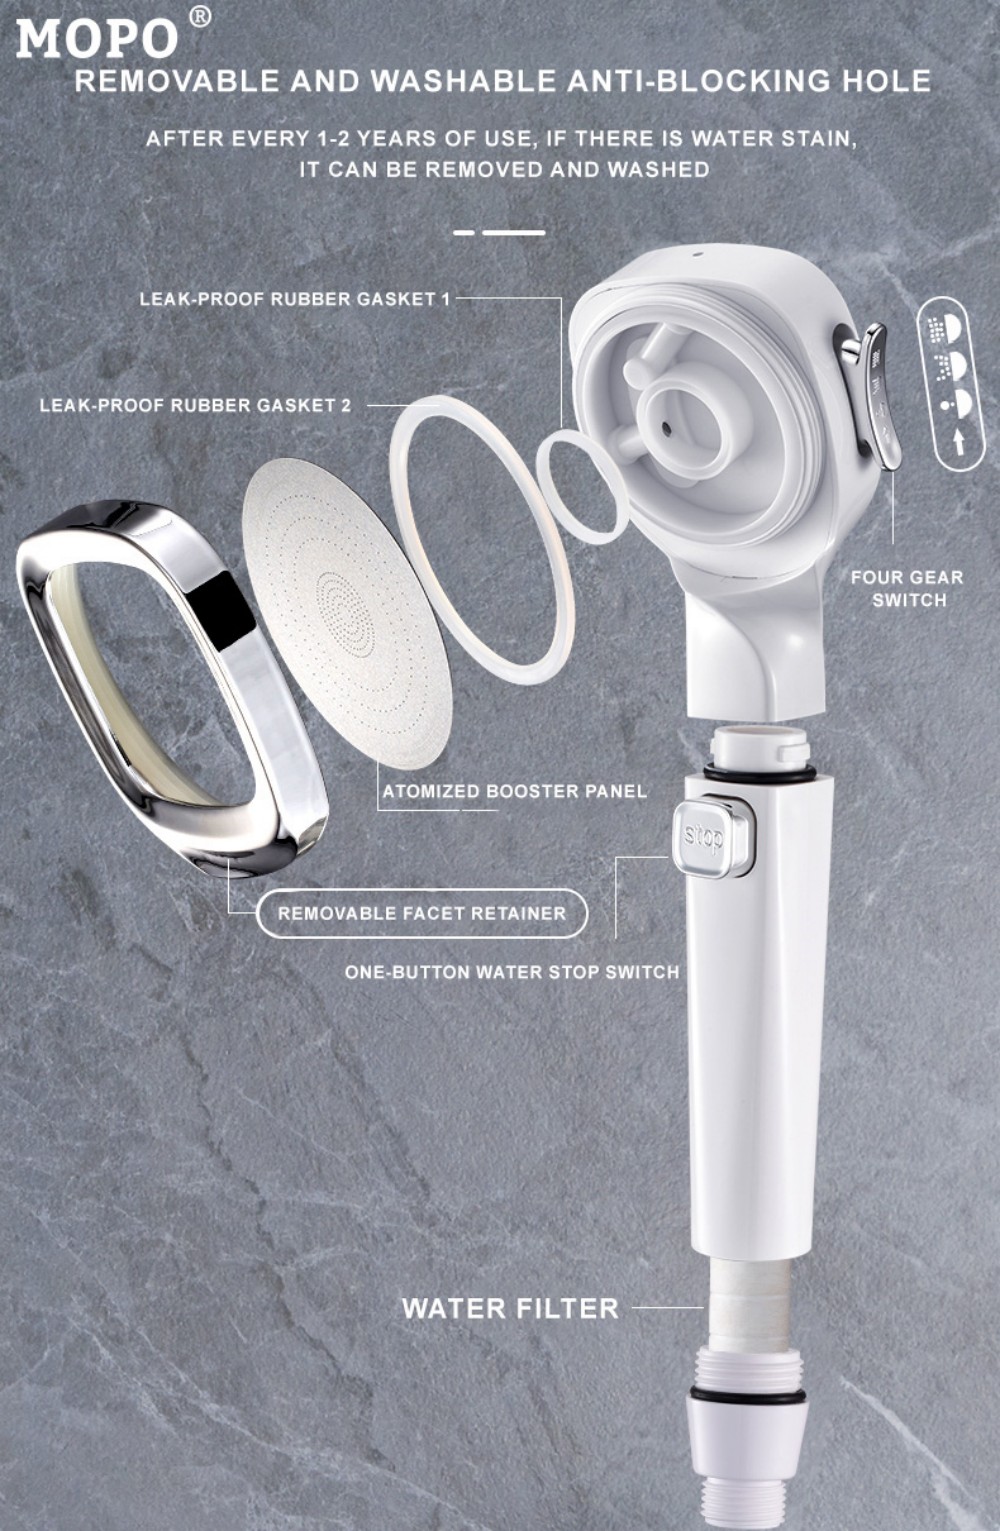 4Mode High Pressure ShowerHead One-key Stop Water Toothbrushes Head Water Saving Adjustable Shower Chuveiro Bathroom Accessories